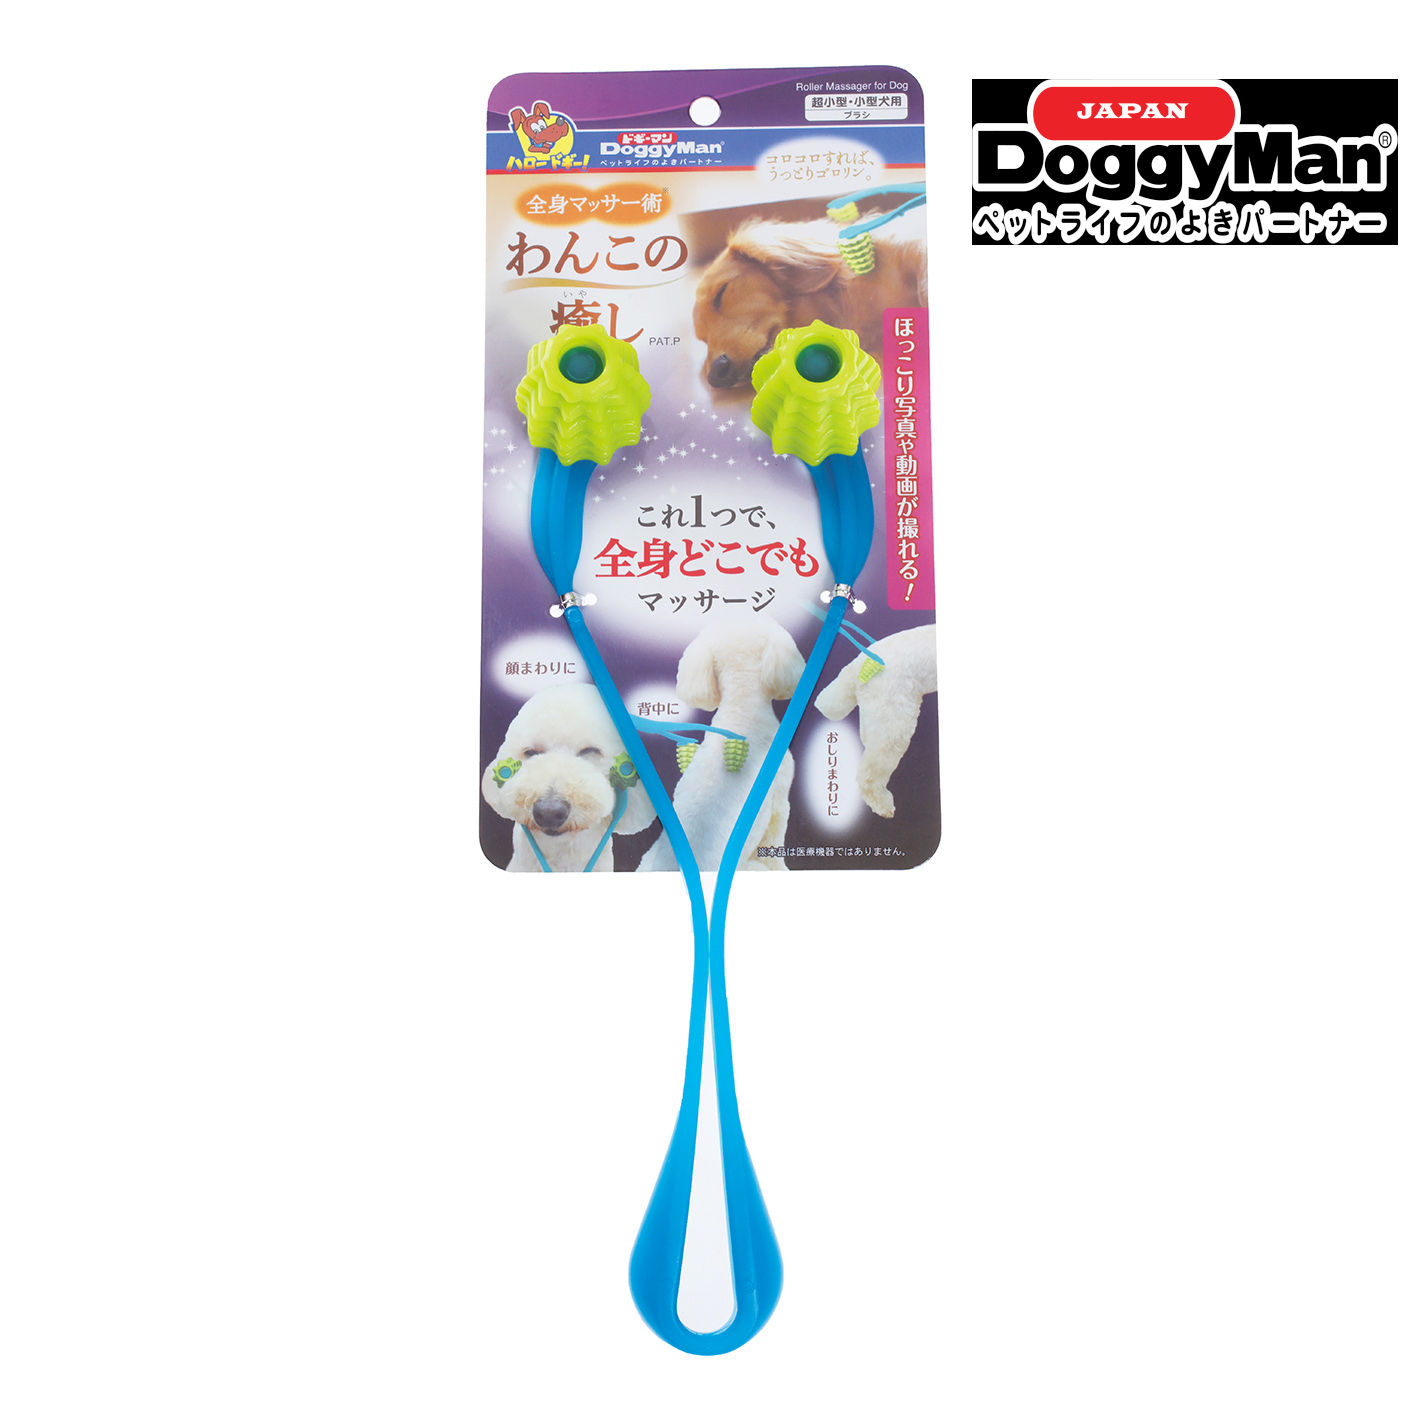 DoggyMan Healing Soft Tip Pet Roller Massager For Dogs (83086)